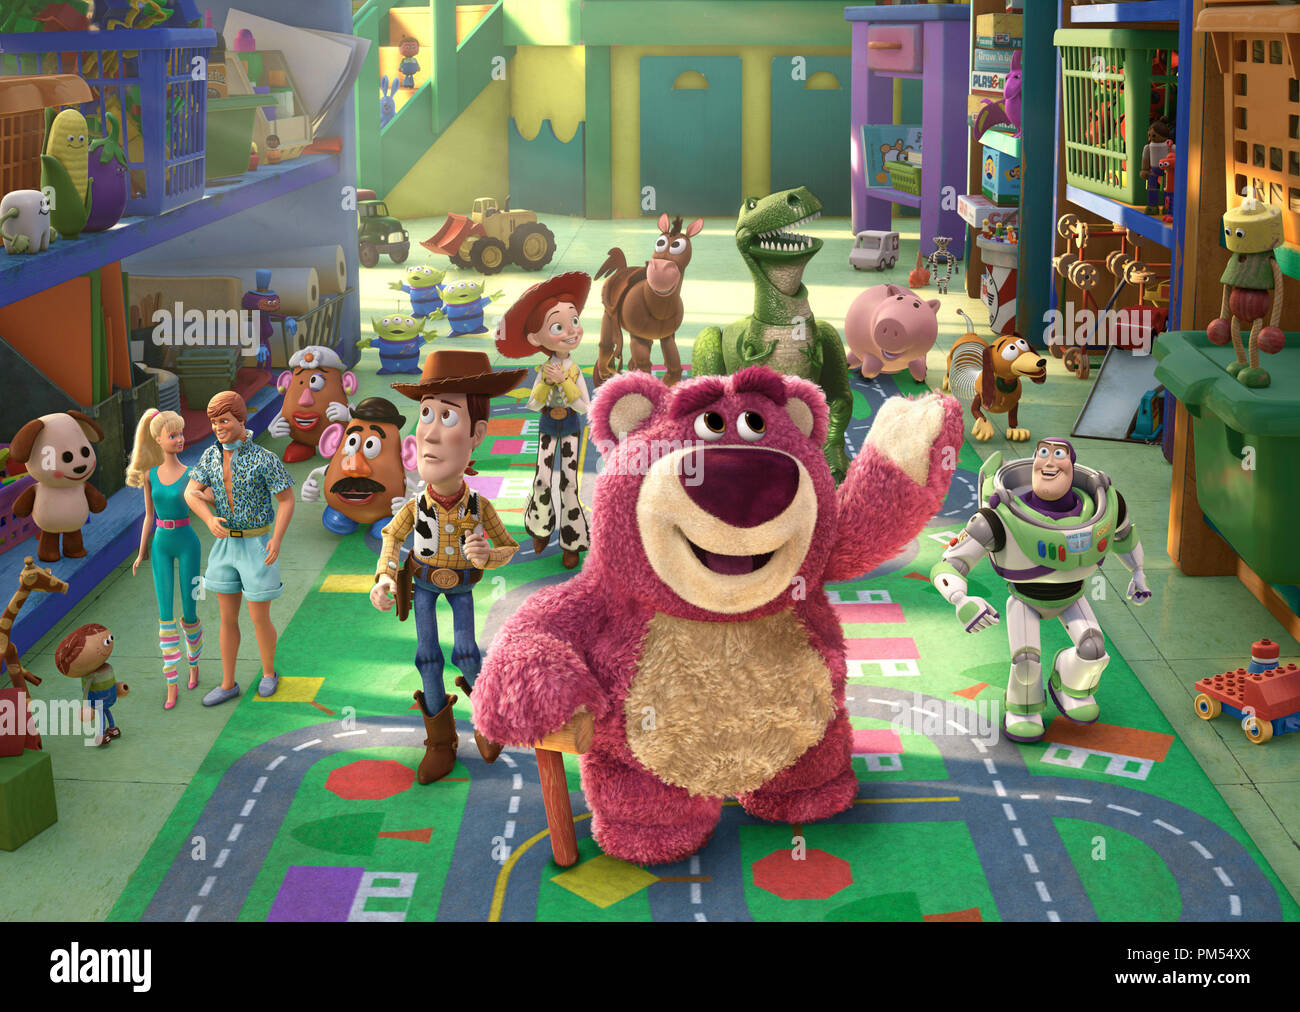 TOY STORY 3   (L-R) Barbie, Ken, Mrs. Potato Head, Mr. Potato Head, Aliens, Woody, Jessie, Bullseye, Lots-o-Huggin Bear, Rex, Hamm, Slinky Dog, Buzz Lightyear   © Disney/Pixar.  All Rights Reserved. Stock Photo